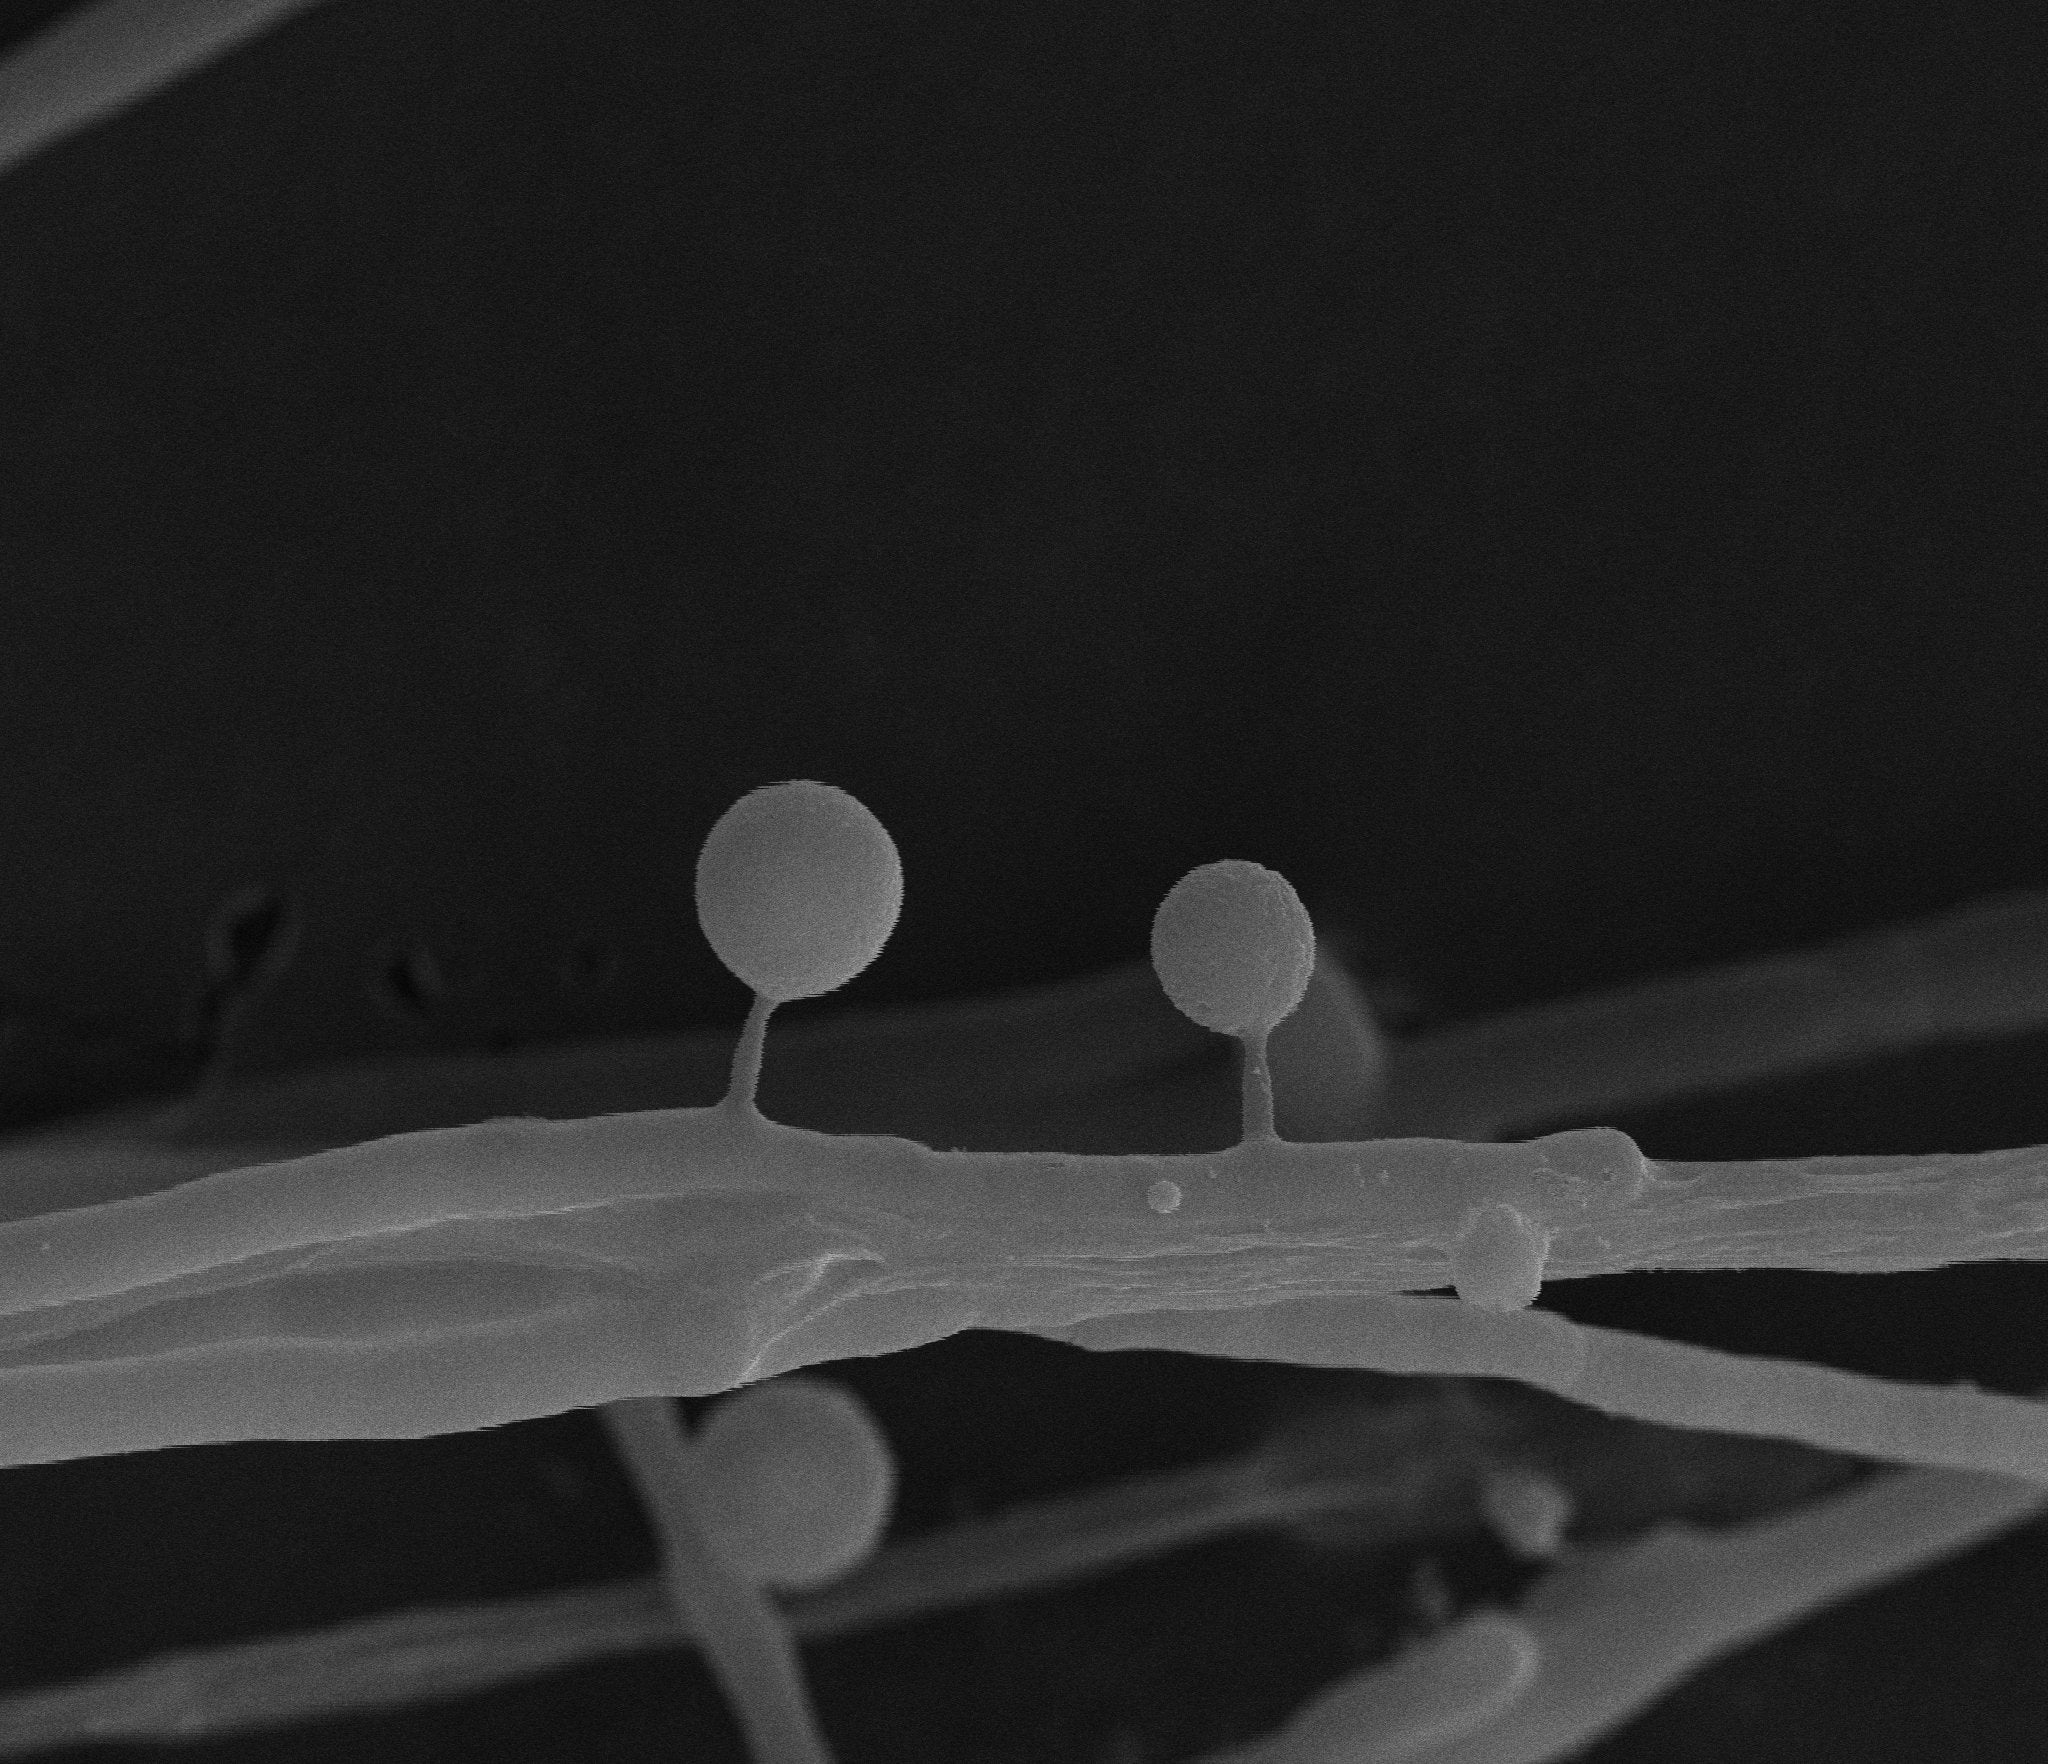 Oyster mushroom toxic "lollipops" under a microscope